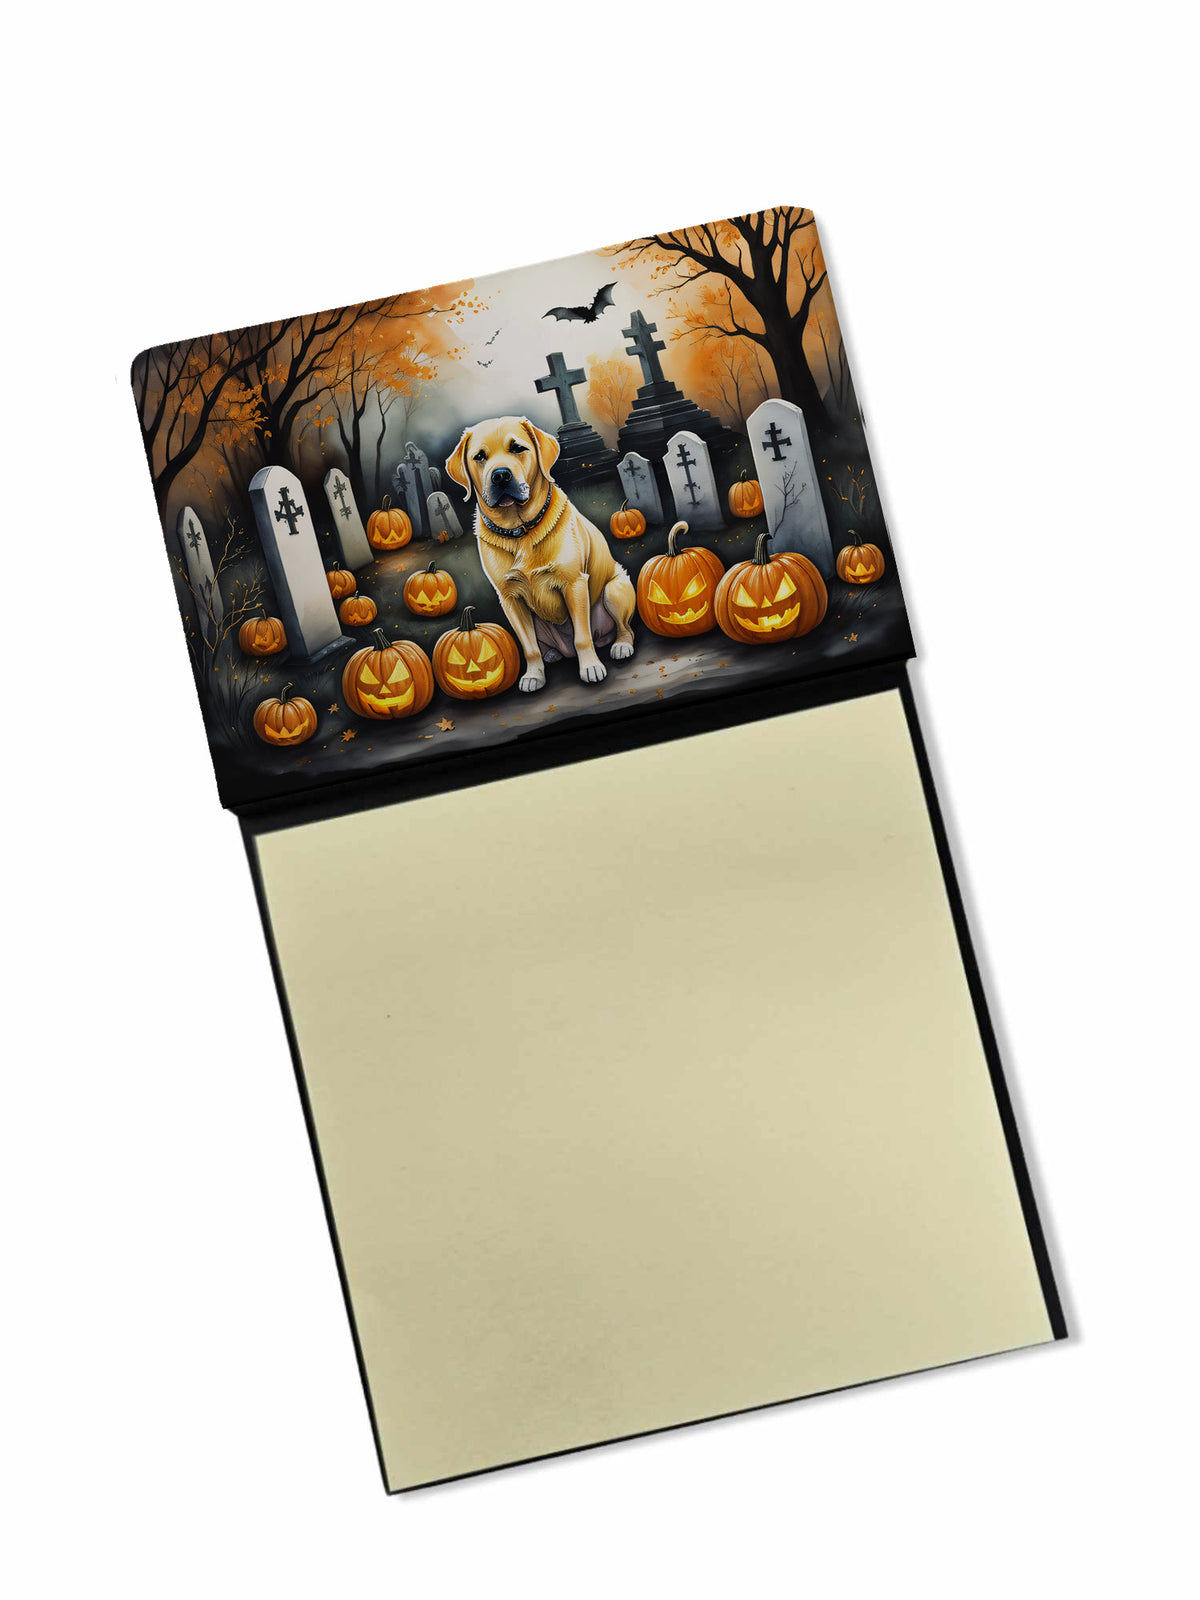 Buy this Yellow Labrador Retriever Spooky Halloween Sticky Note Holder